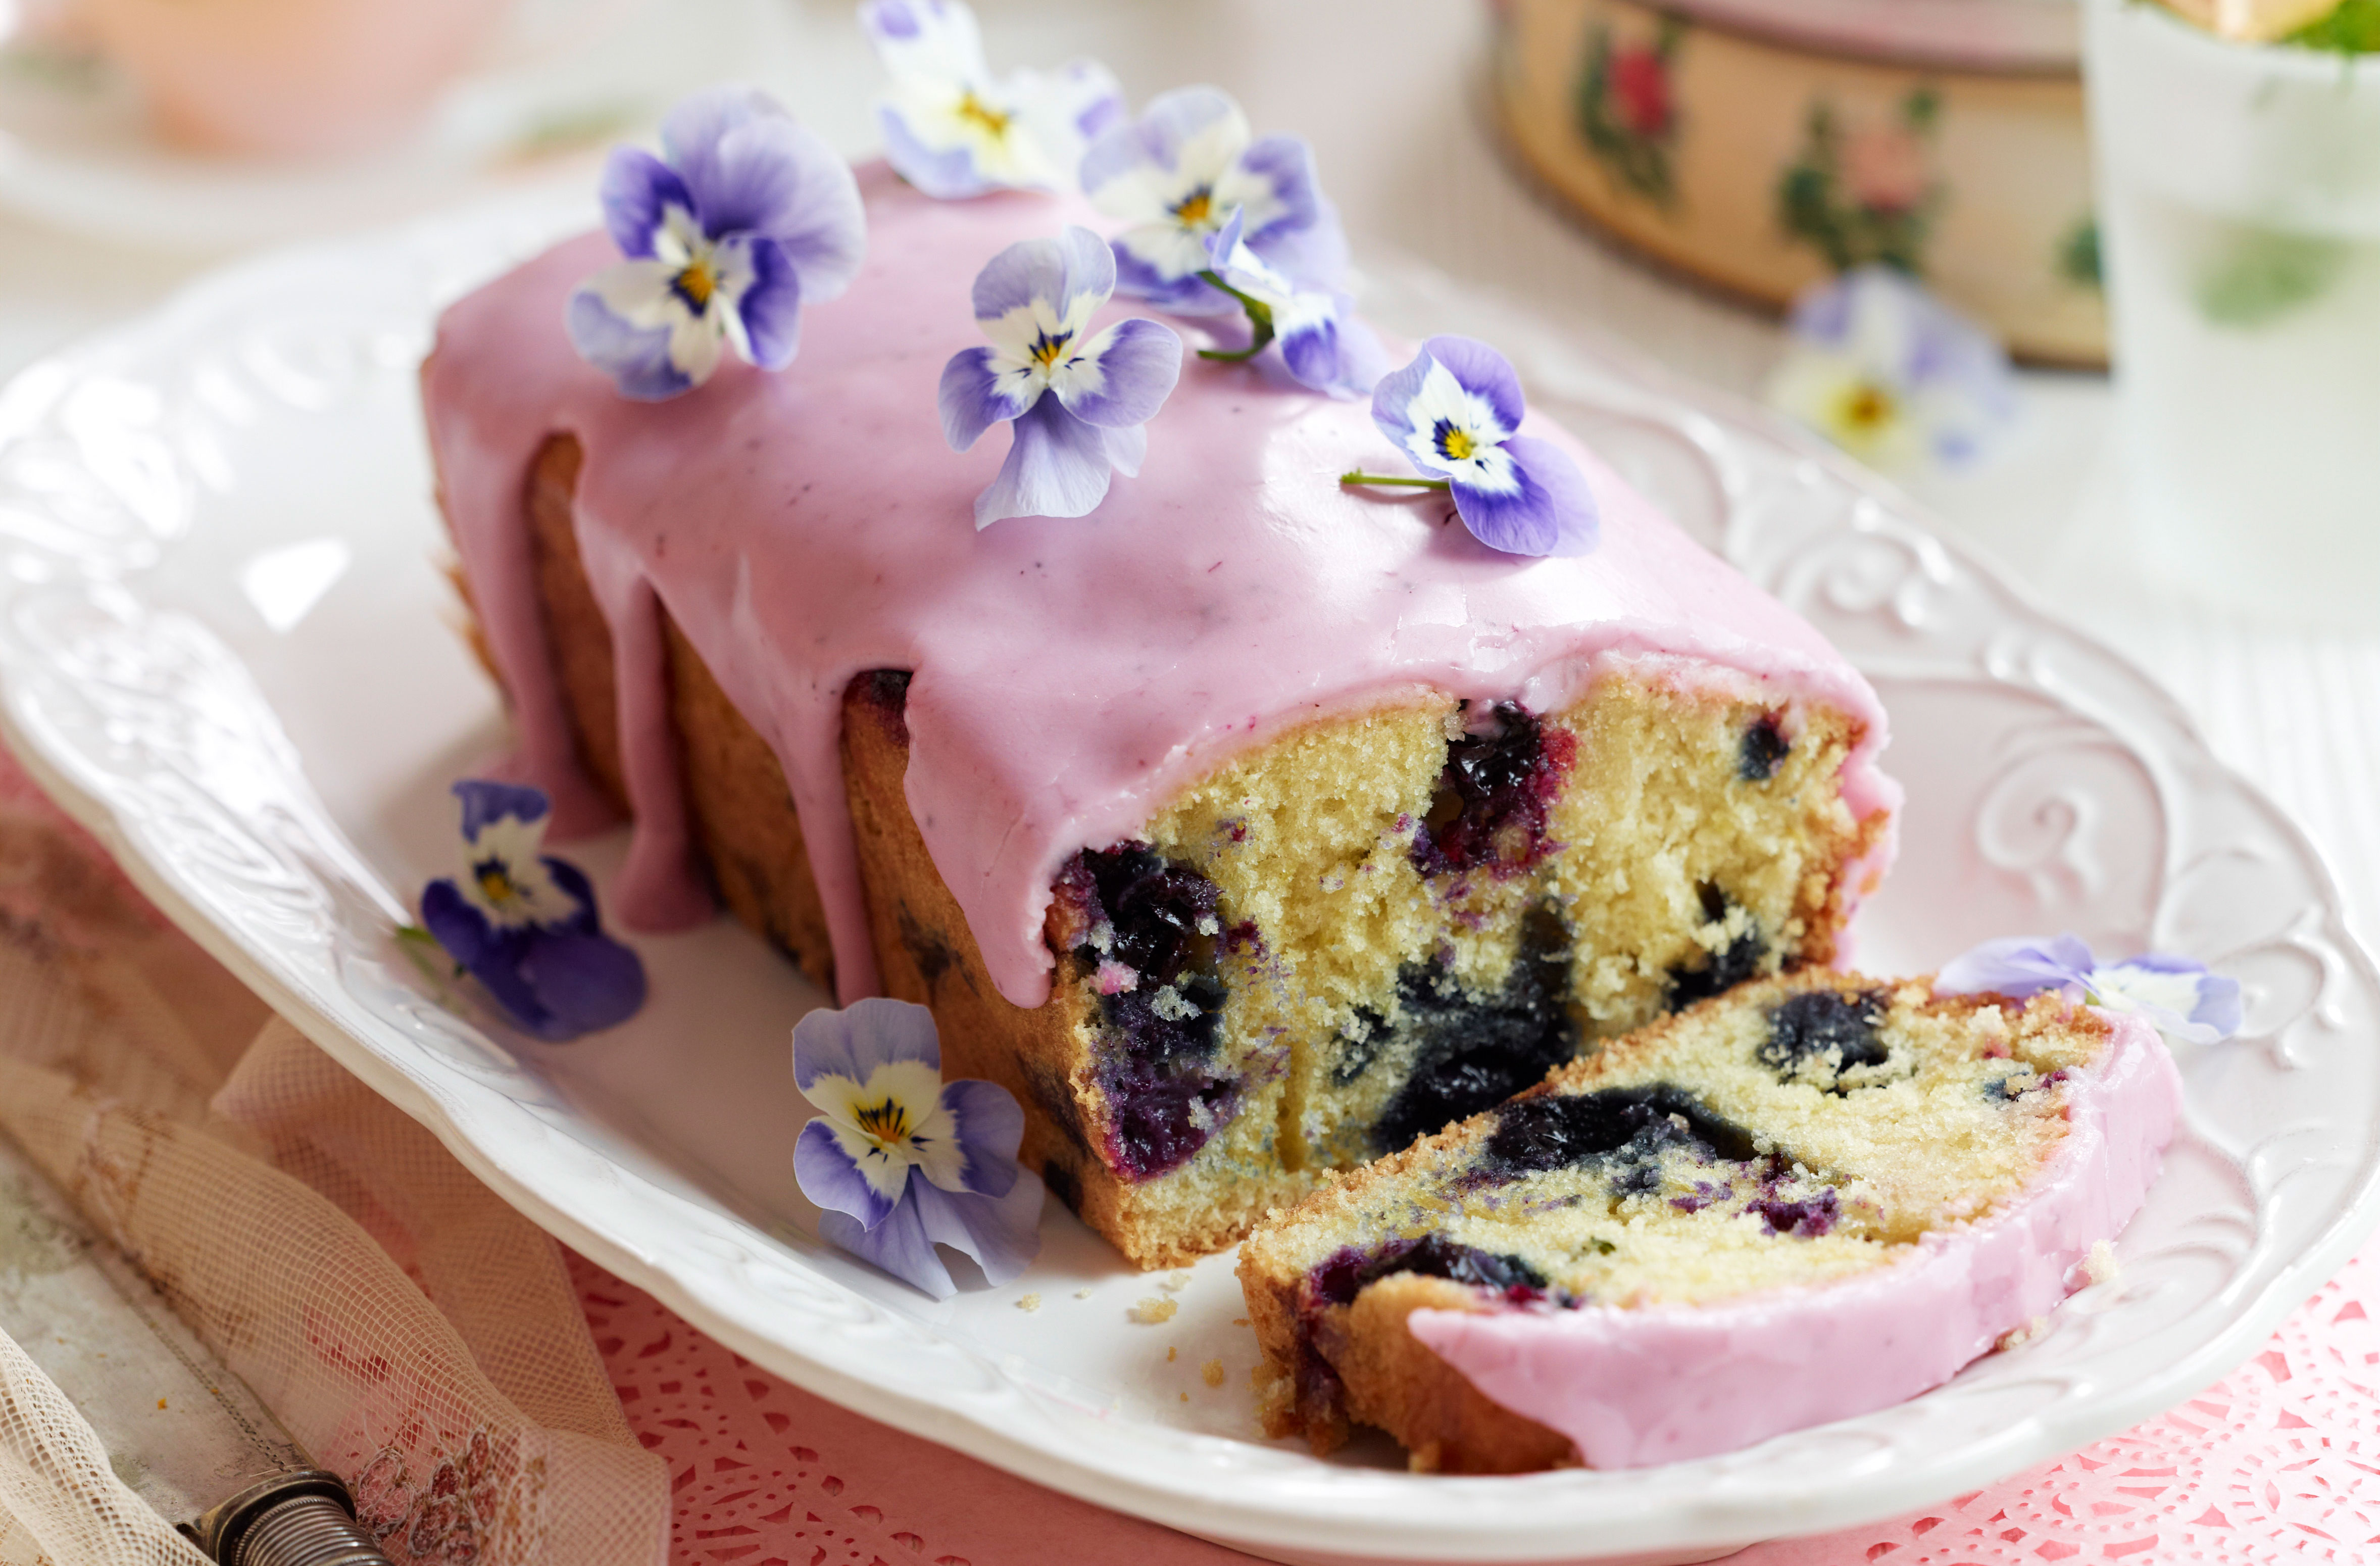 https://www.goodtoknow.co.uk/recipes/lemon-and-blueberry-drizzle-cake